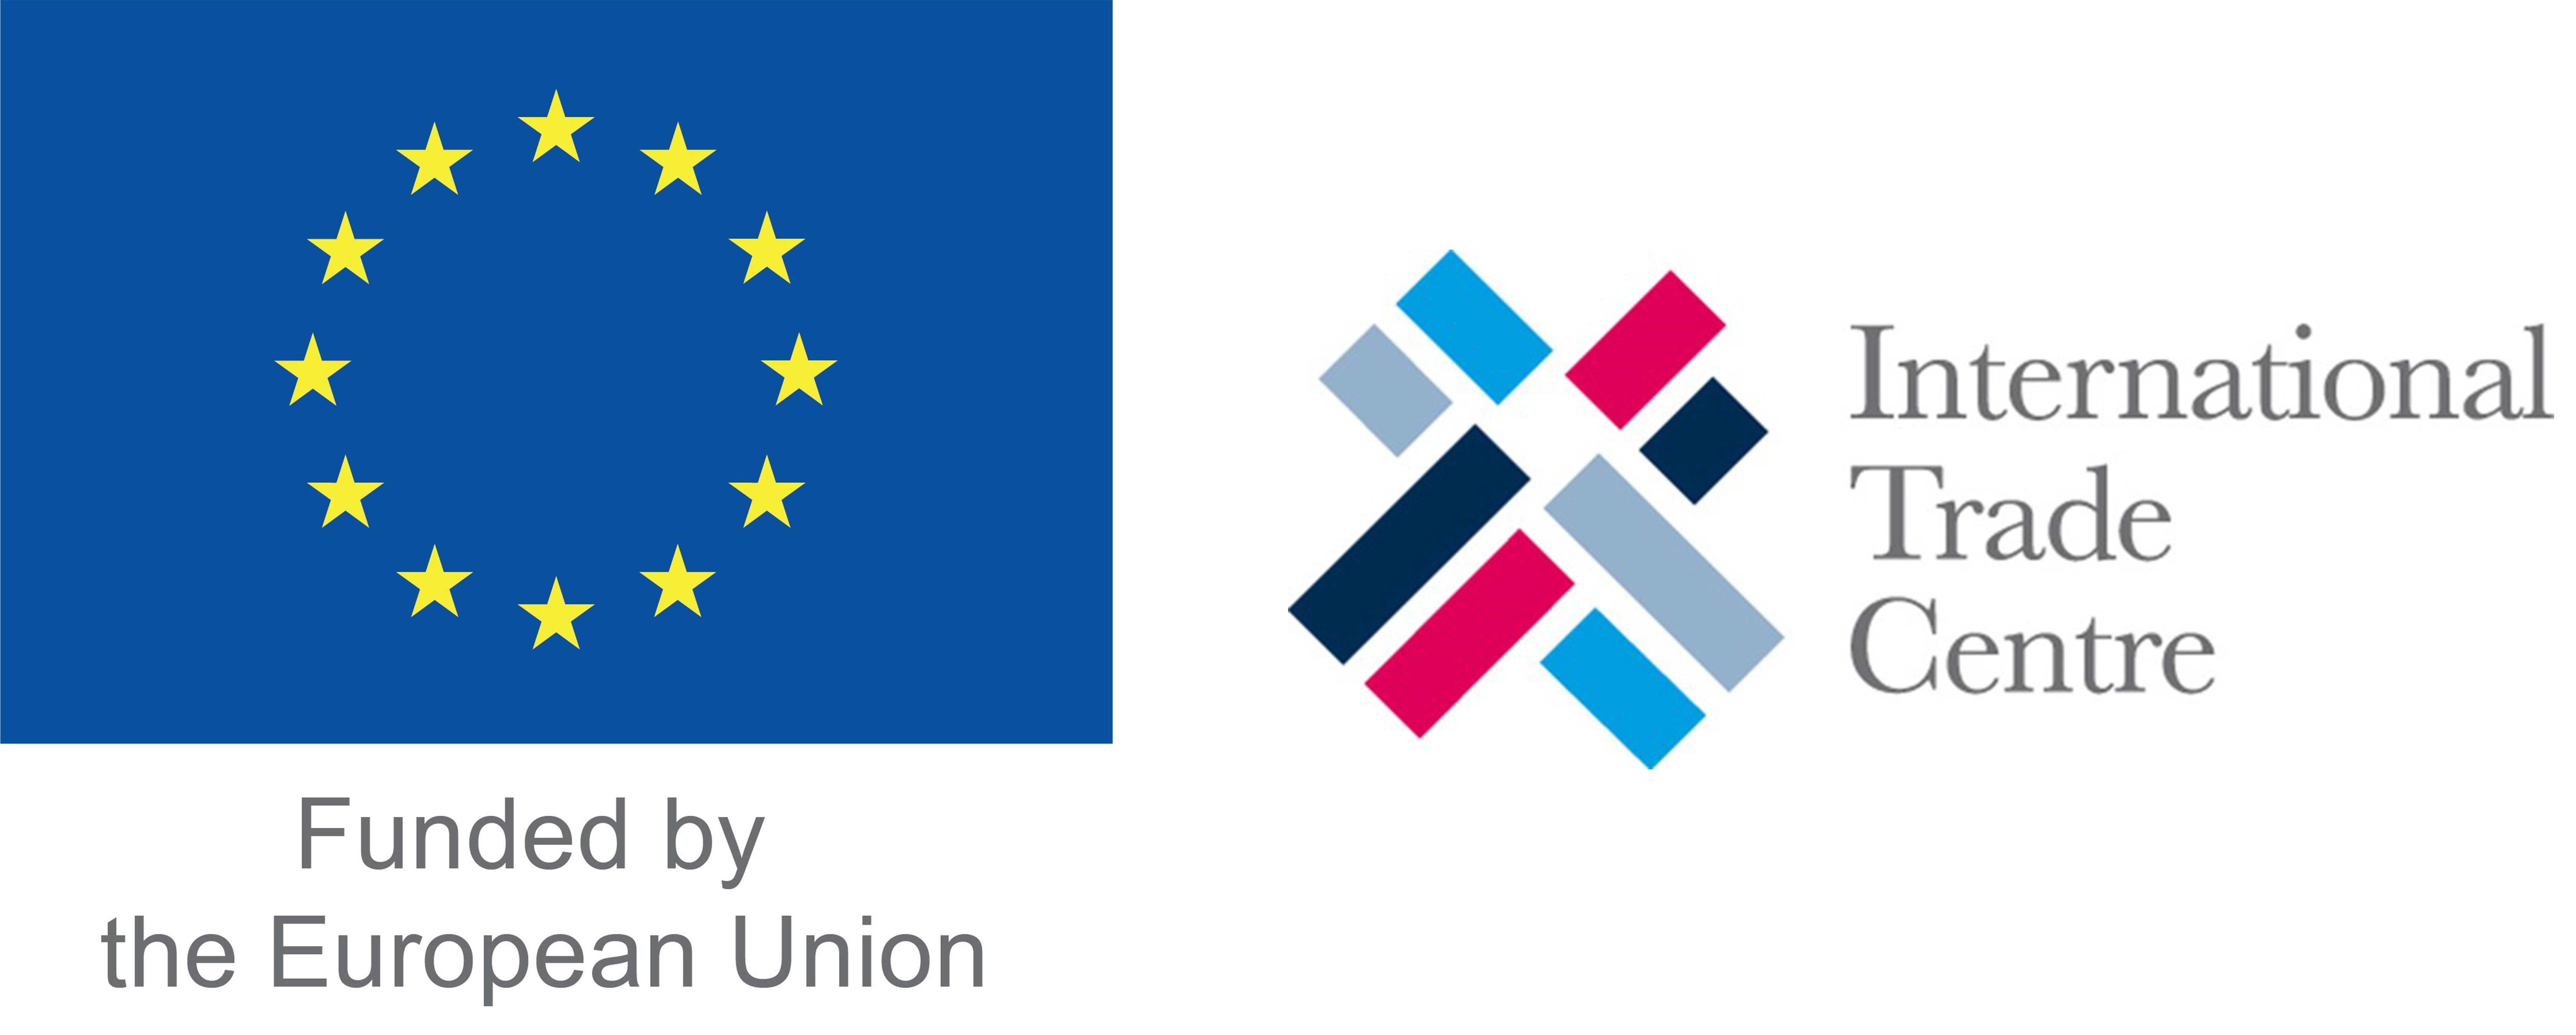 EU and ITC logo